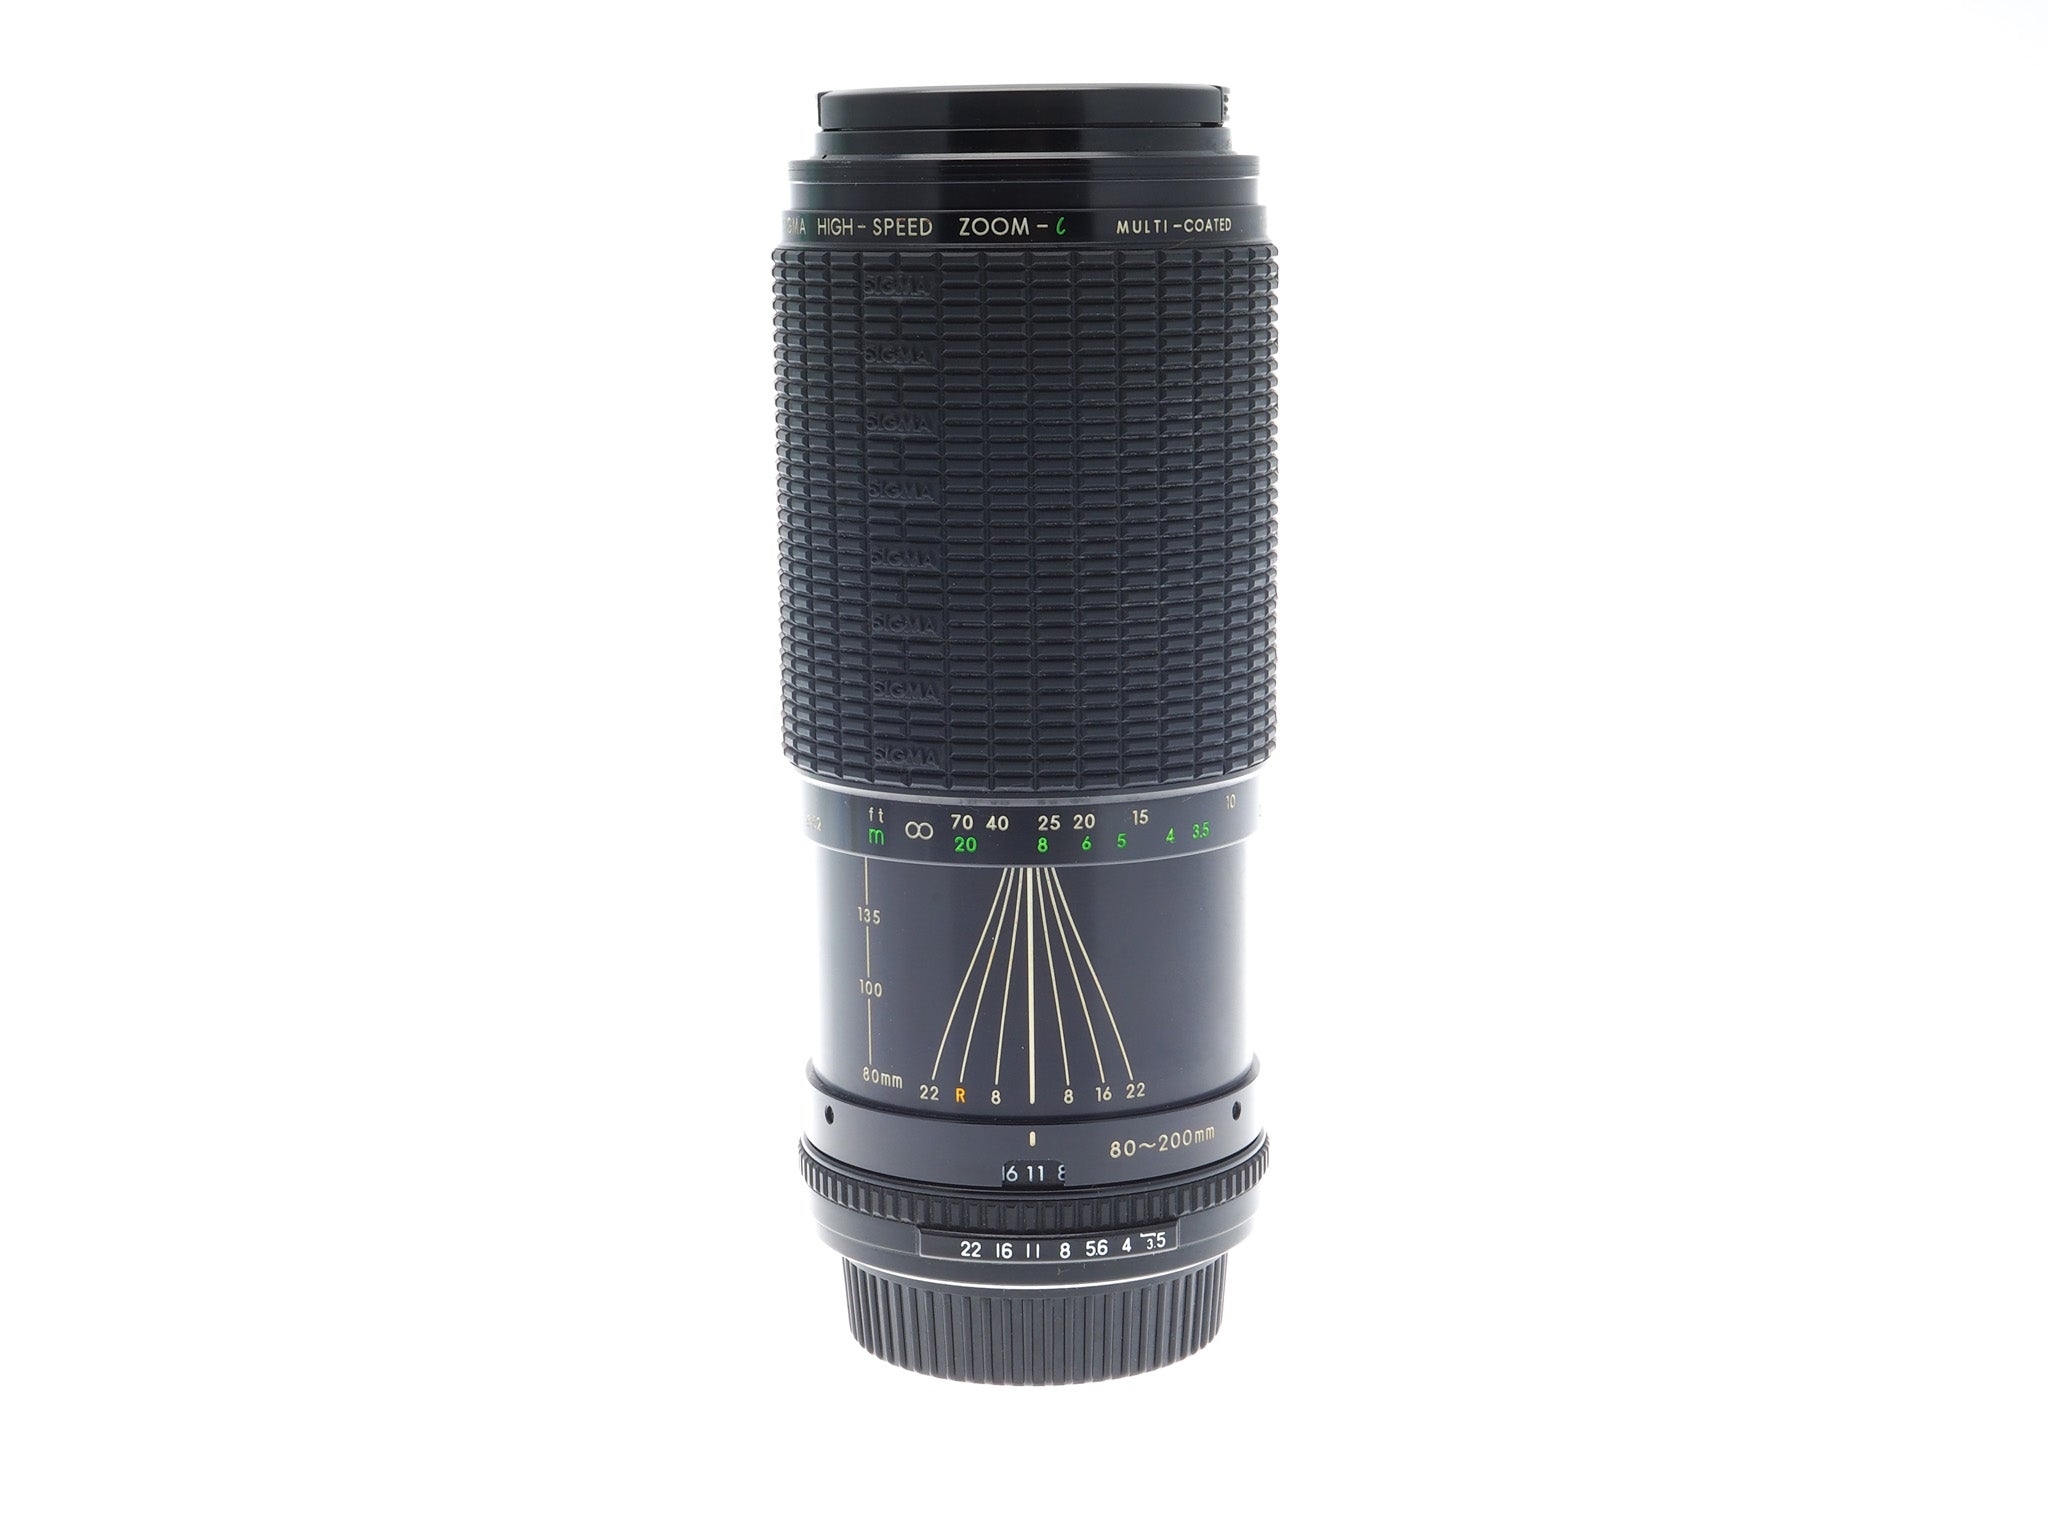 Sigma 80-200mm f3.5-4 High-Speed Zoom-C Multi-Coated - Lens – Kamerastore